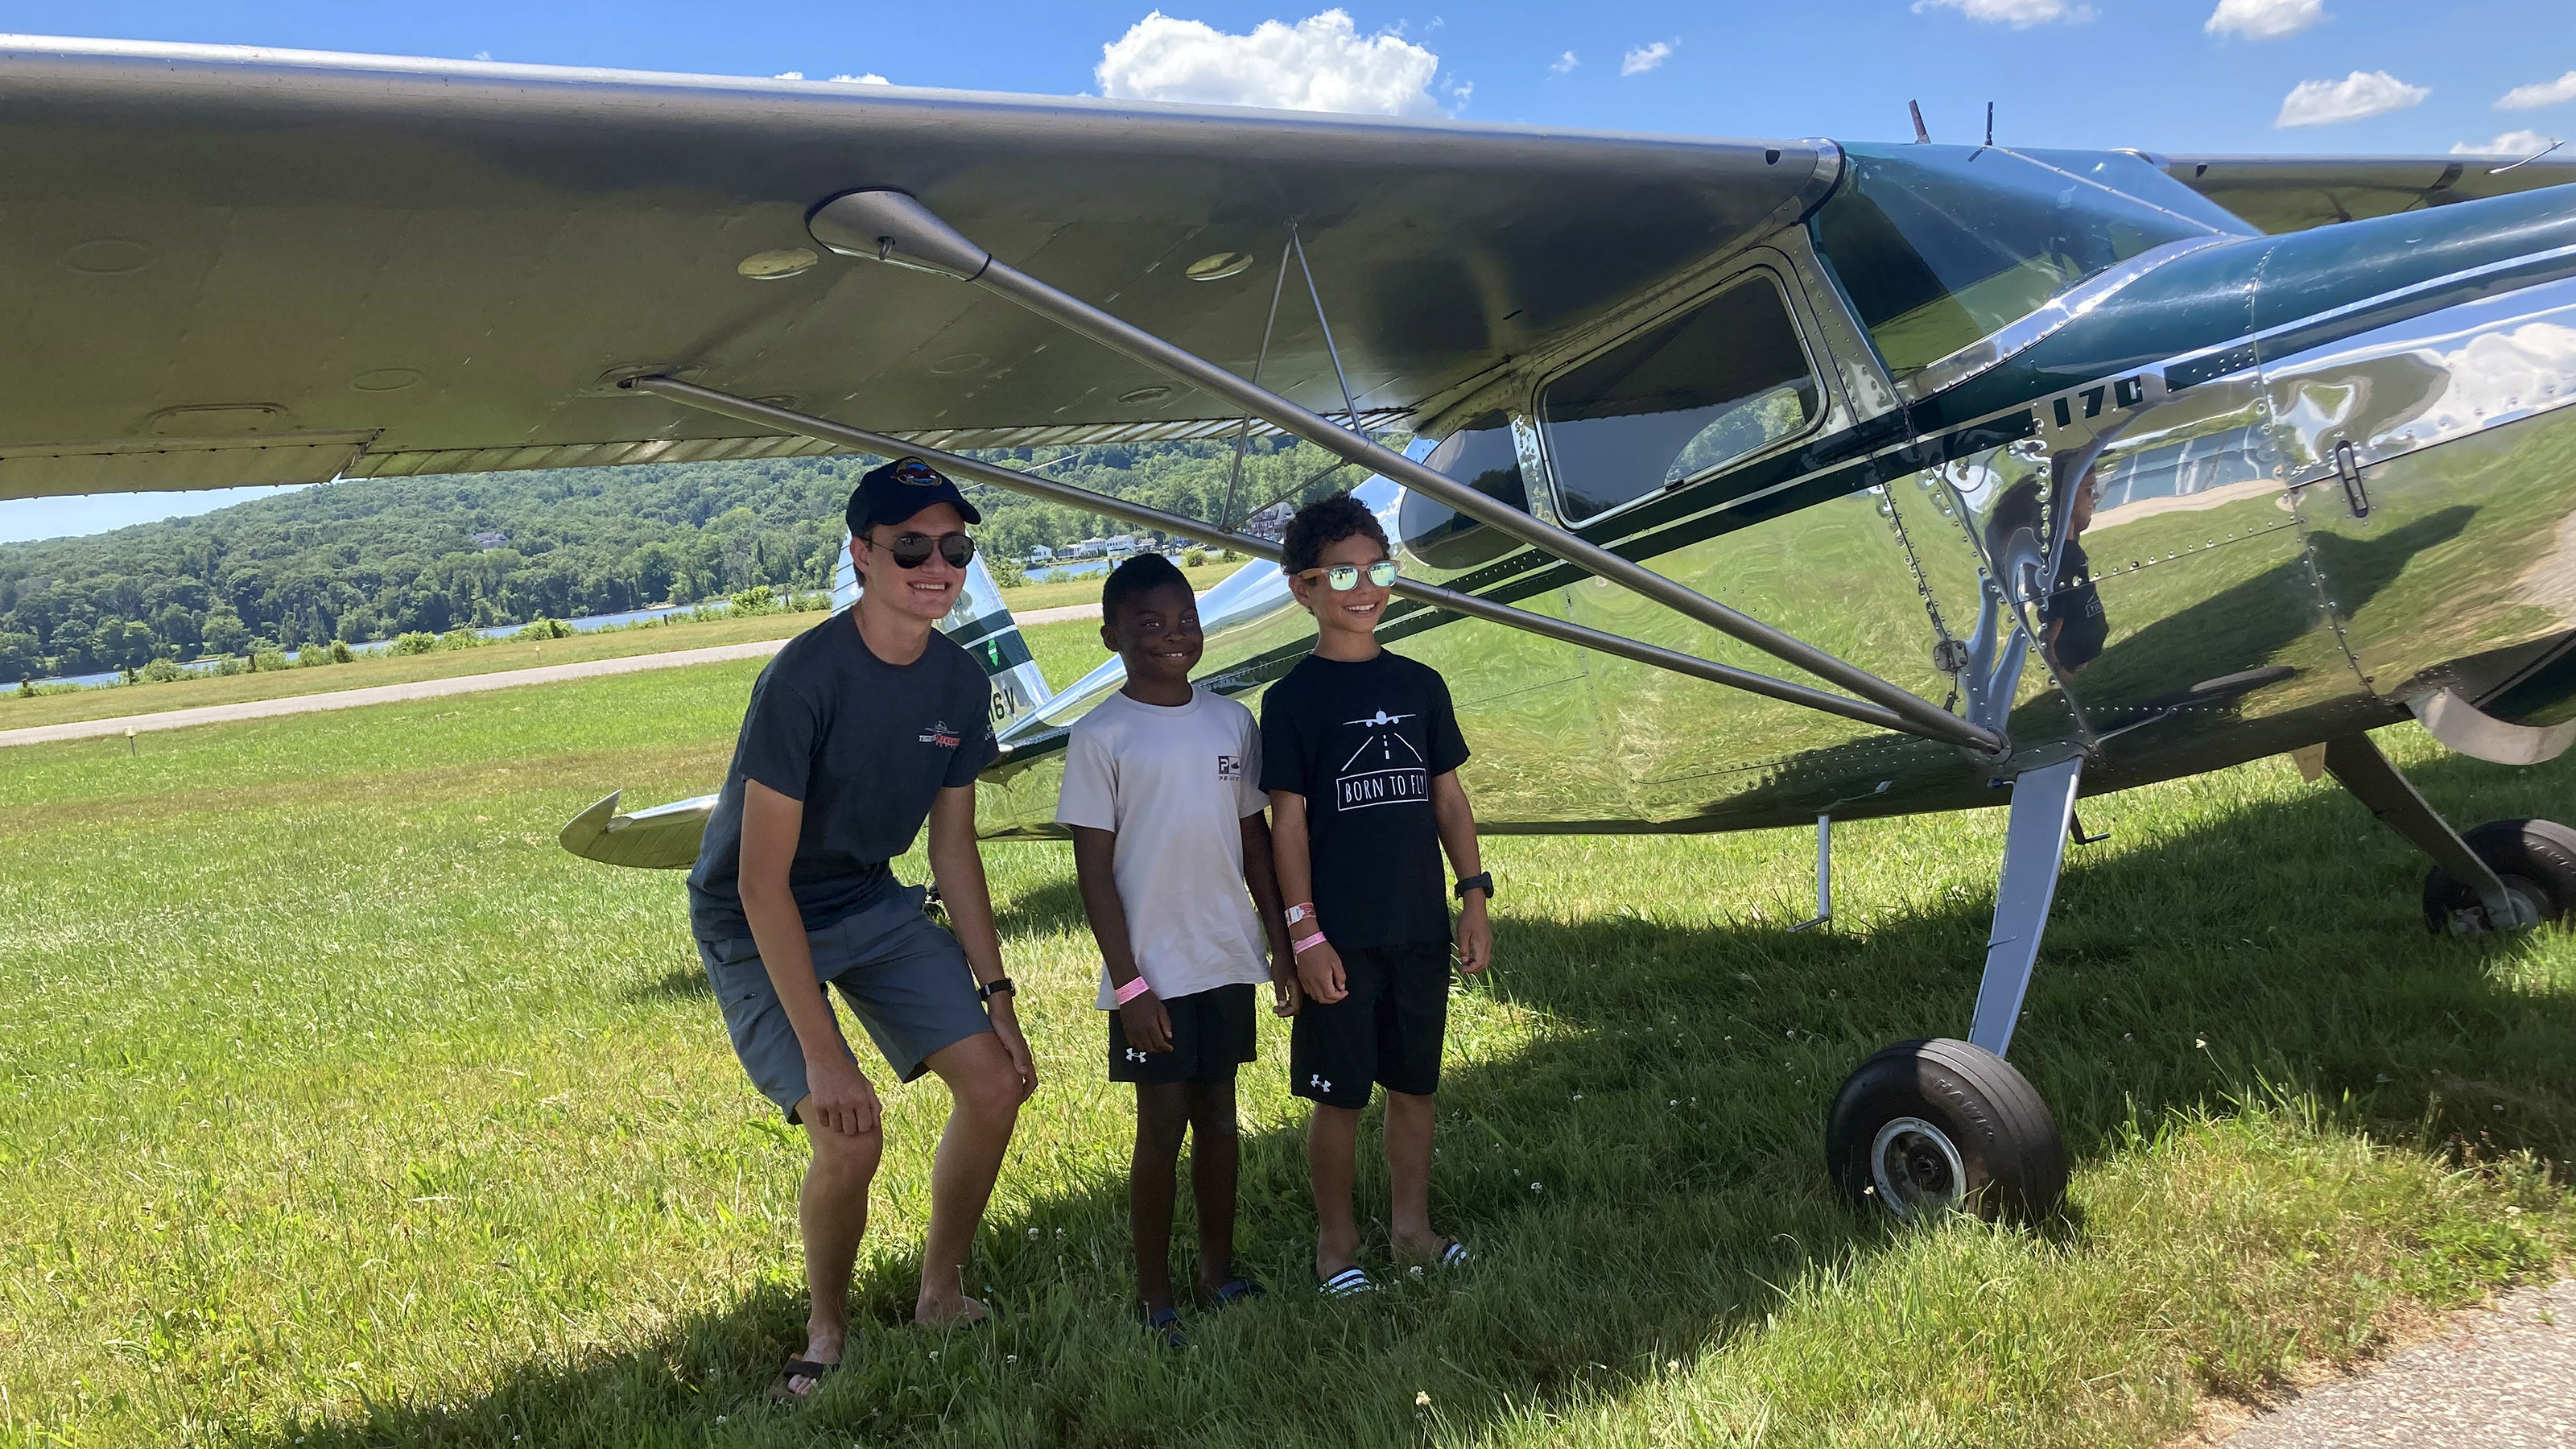 Visiting ambitious aviators